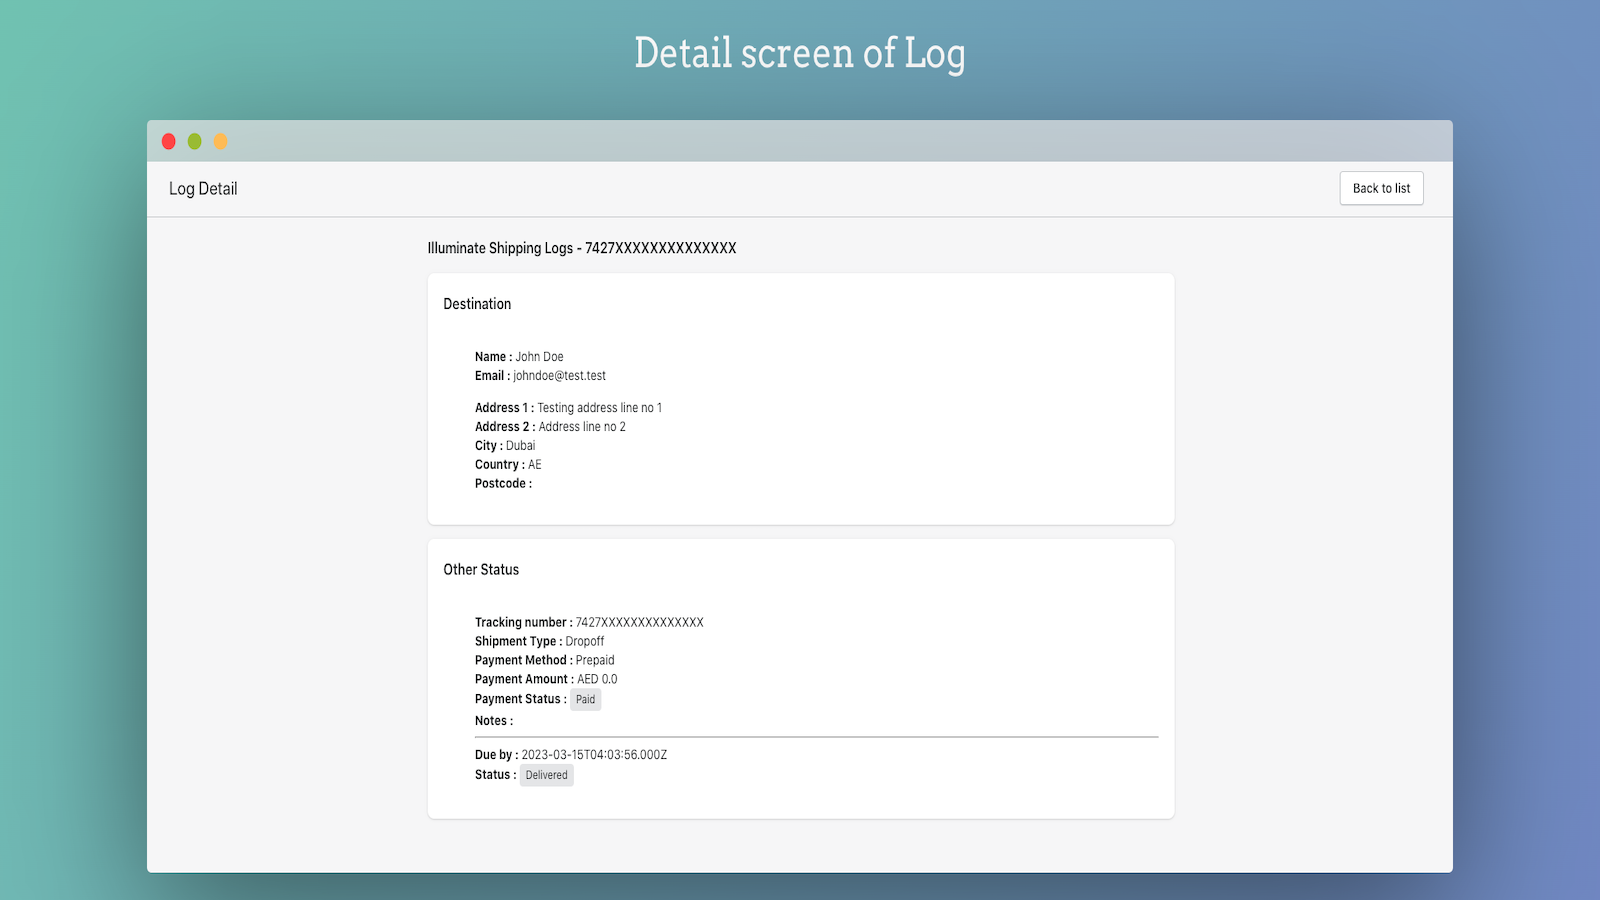 Log details screen